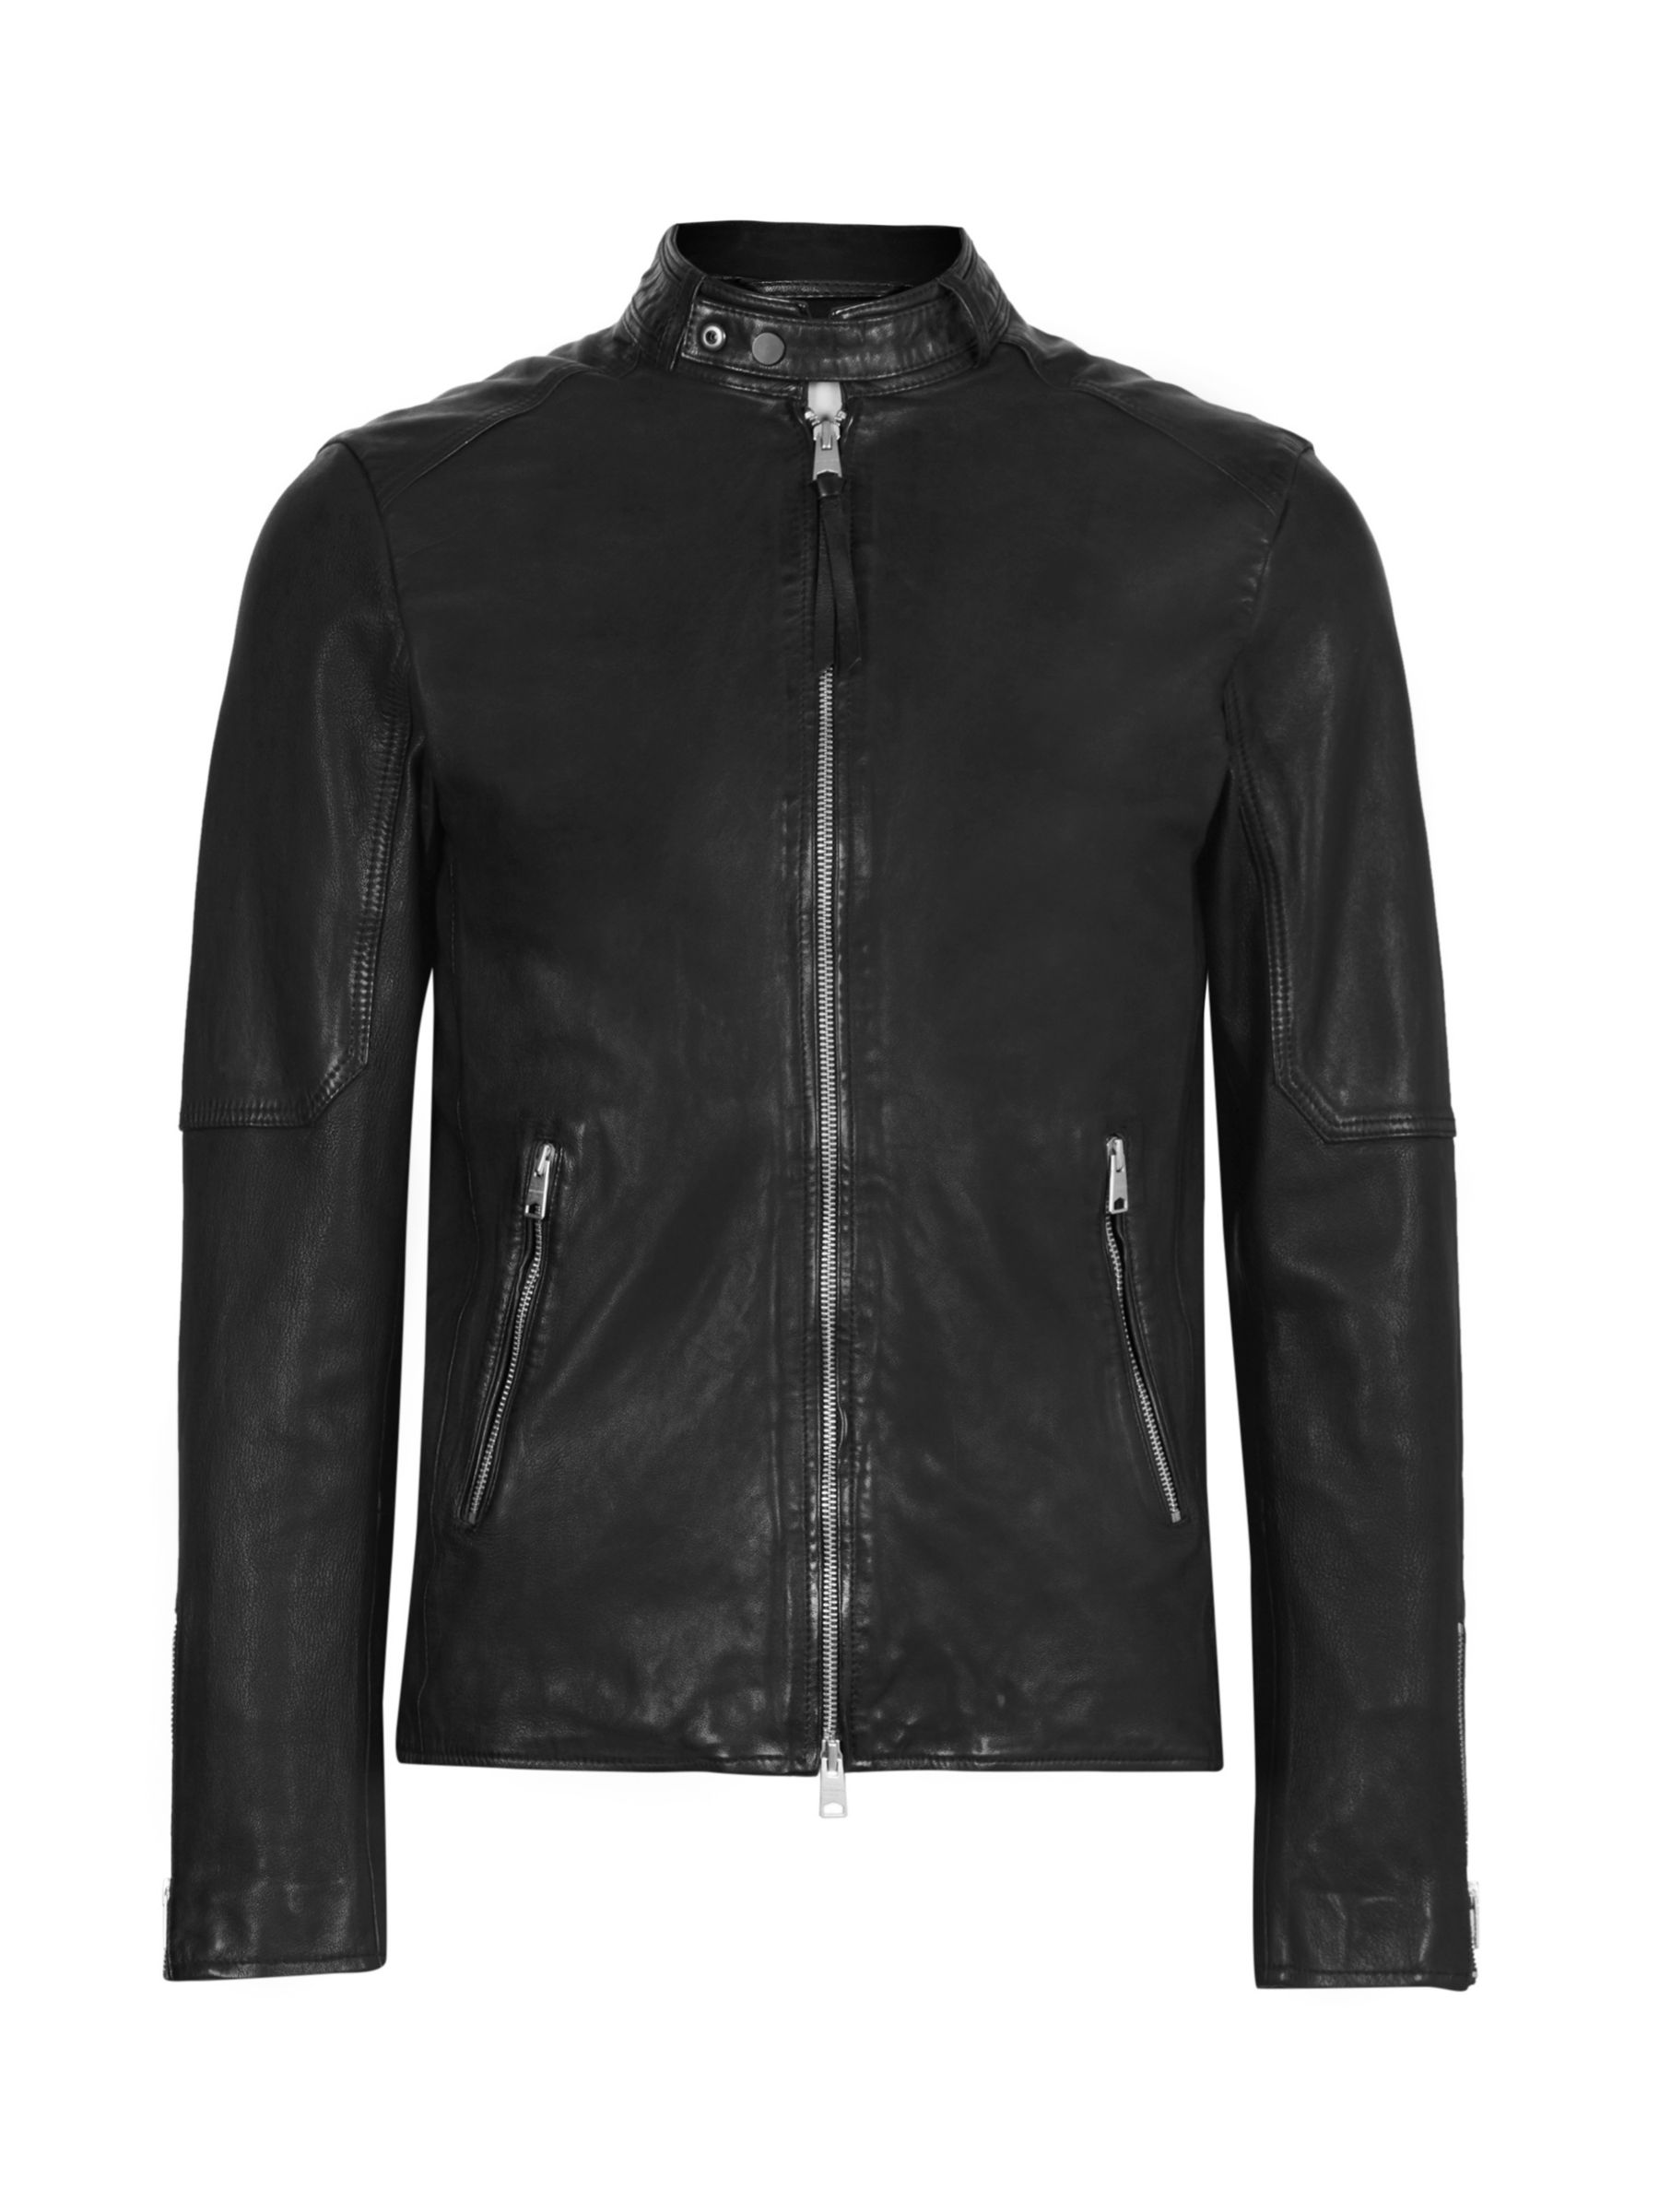 AllSaints Cora Leather Jacket, Jet Black at John Lewis & Partners